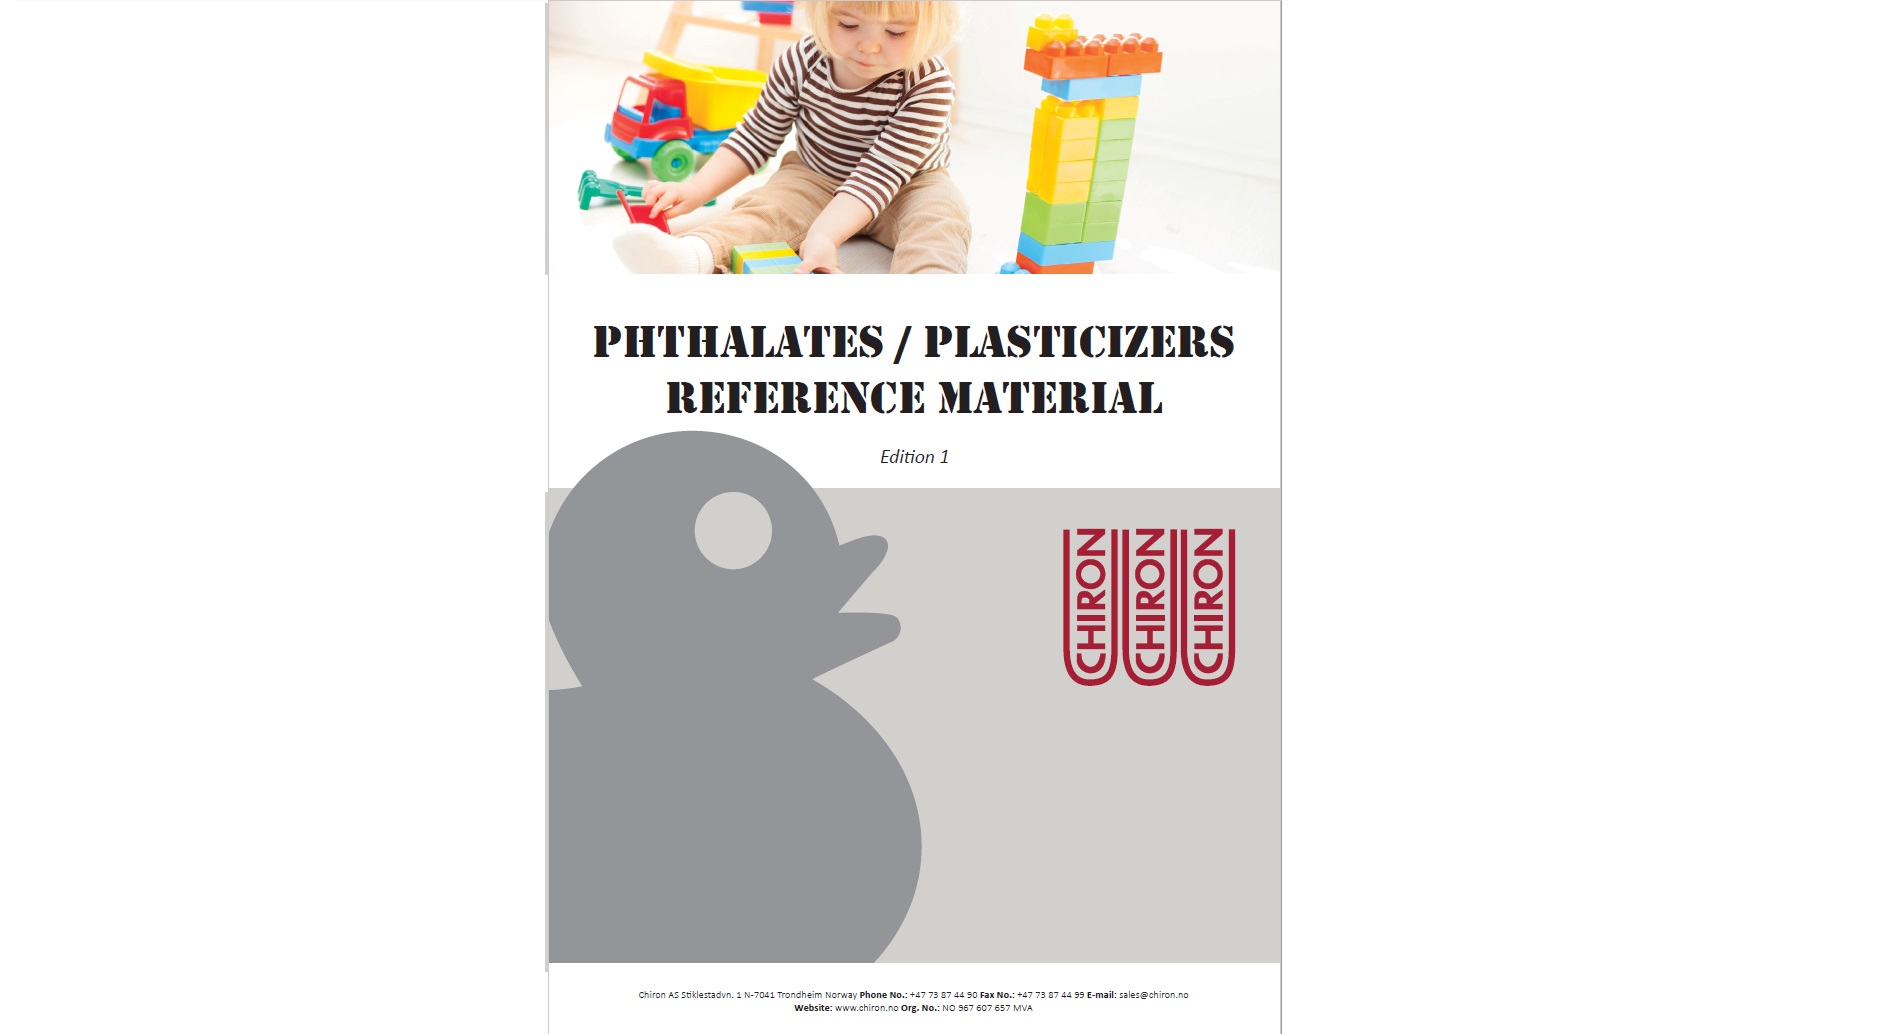 Phthalates/Plasticizers, Edition 1